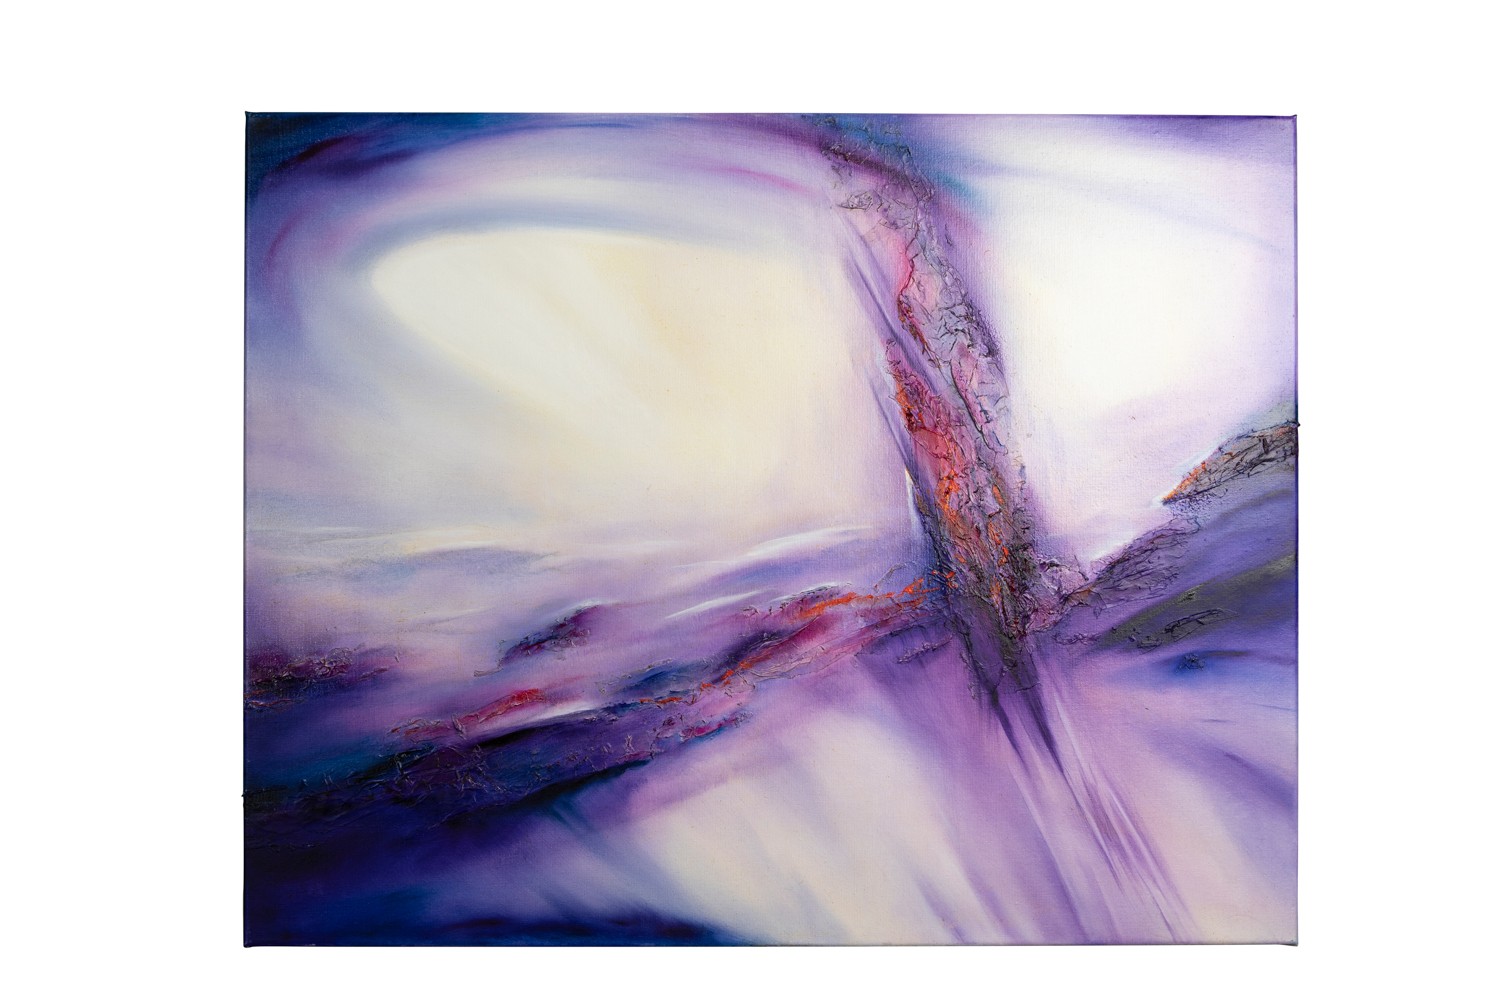 Galerie_Jose_purple-spirit-80-100_01-web.jpg